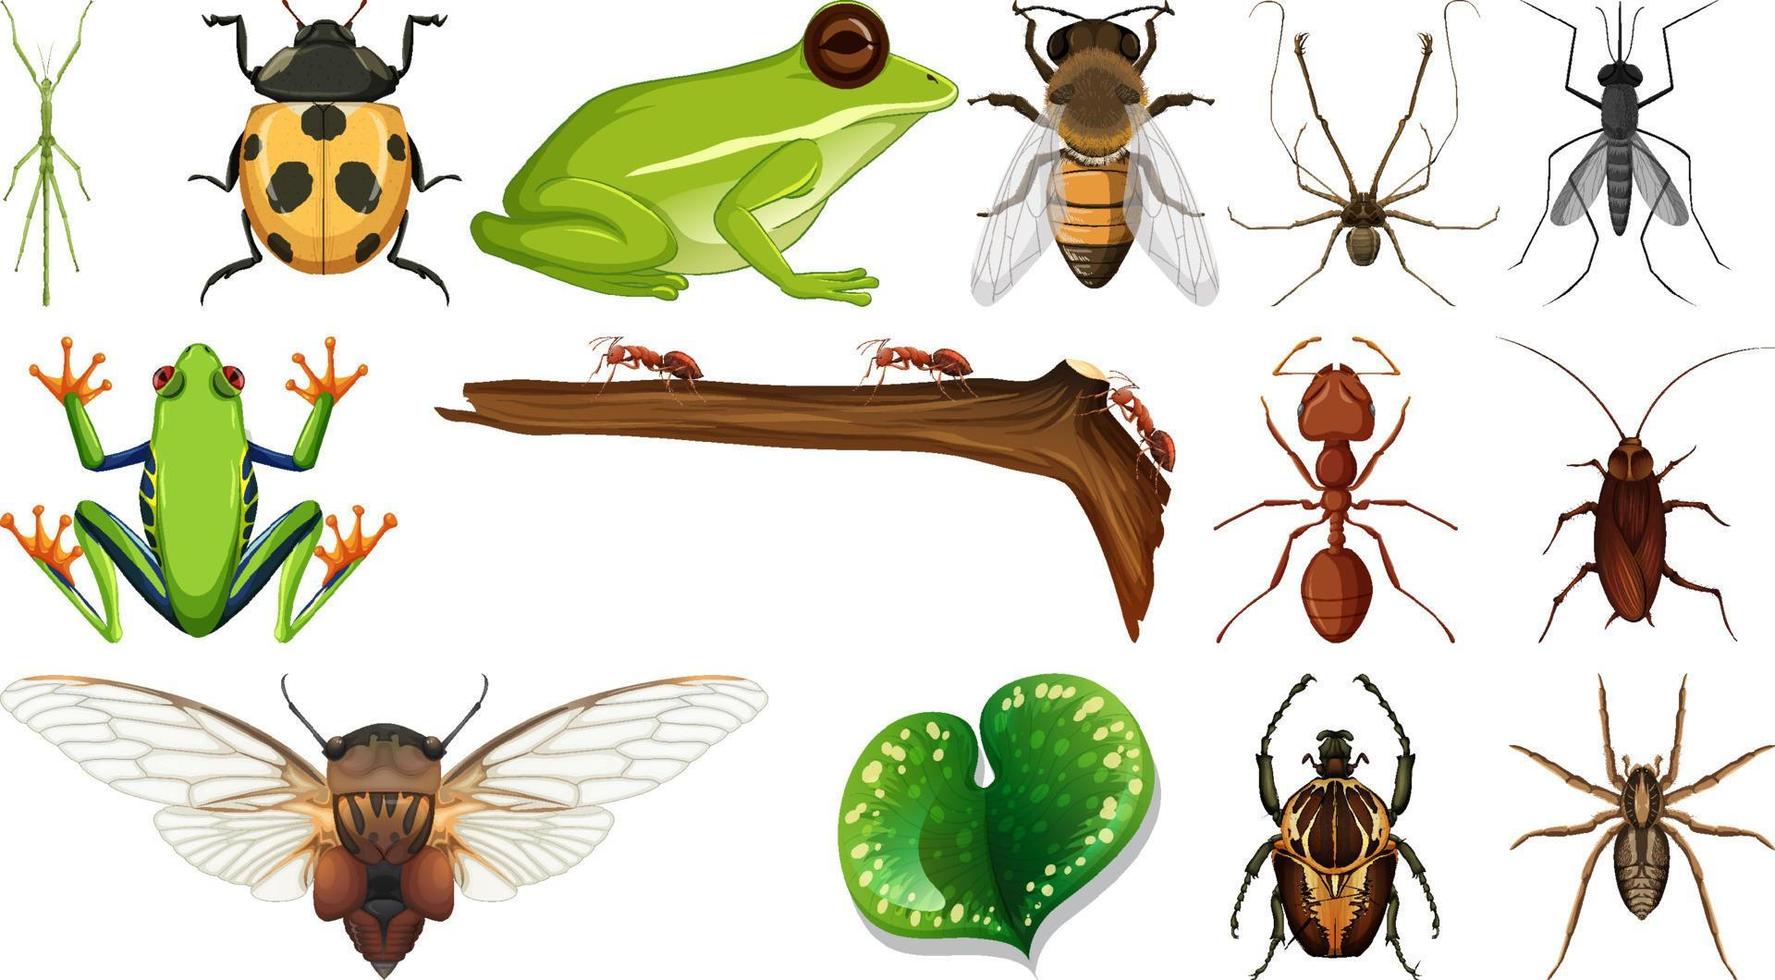 Colección de diferentes insectos aislado sobre fondo blanco. vector